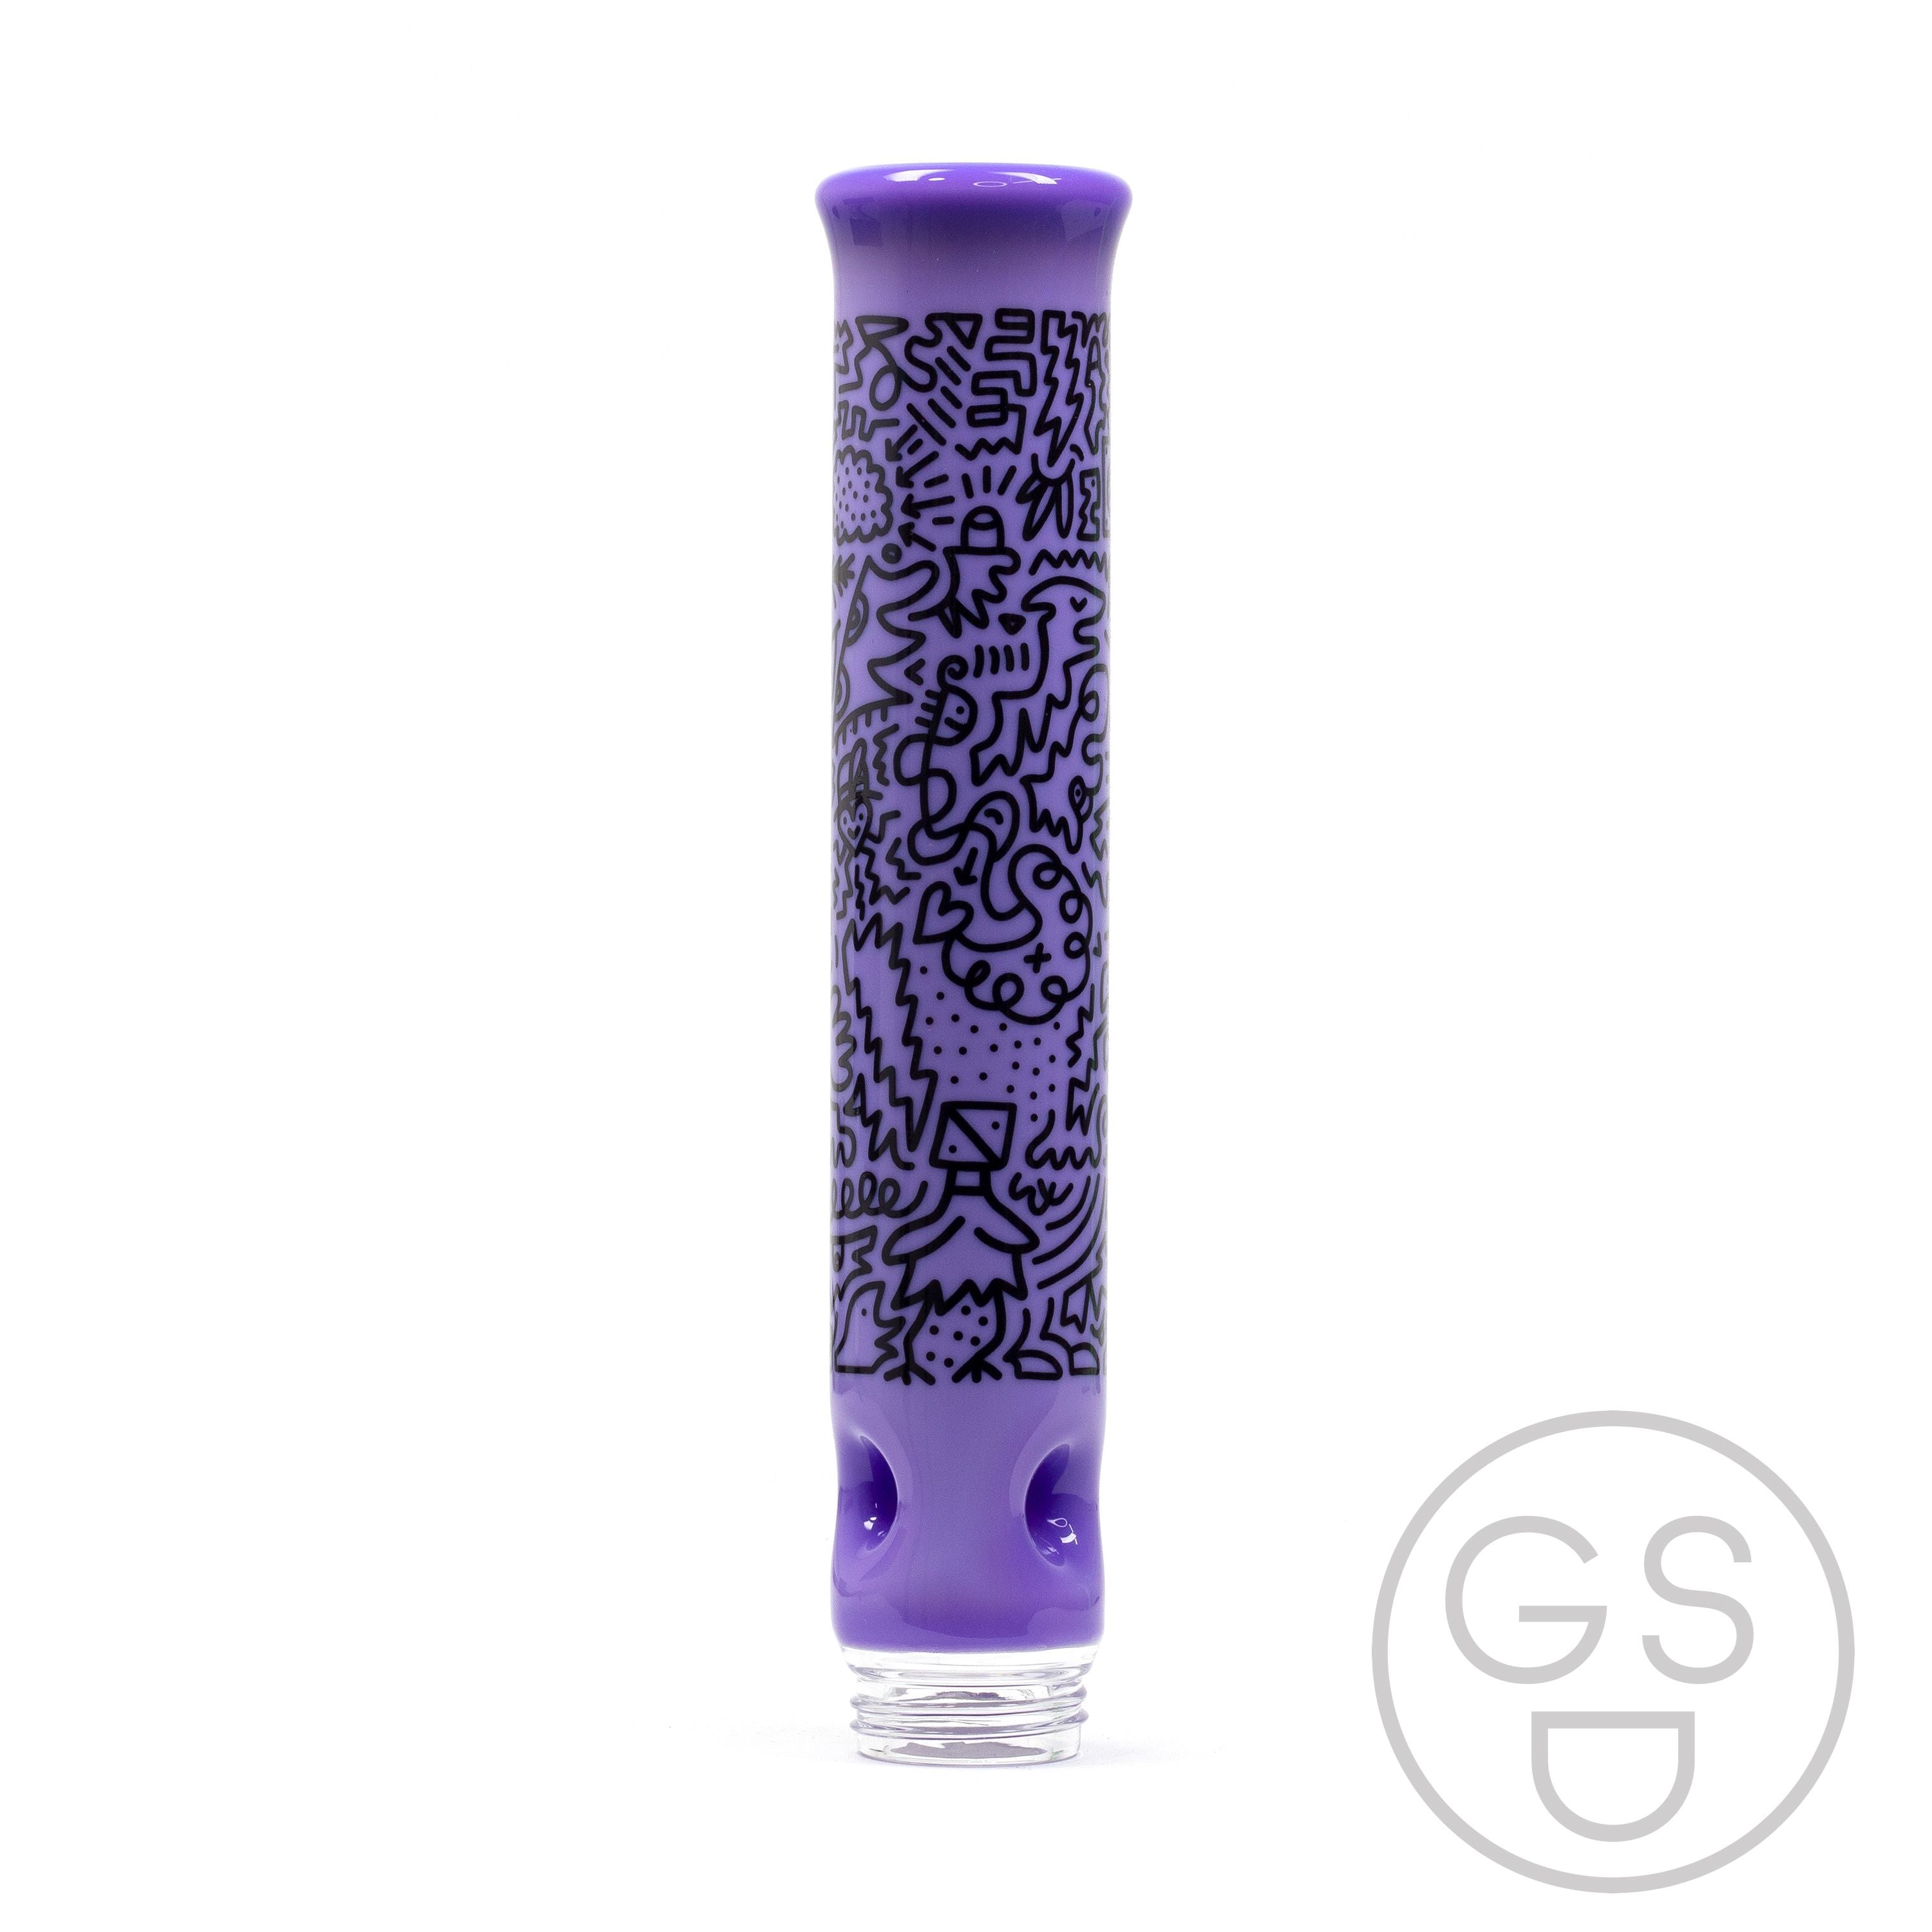 Prism Modular Waterpipe Tall Mouthpiece - Pretty Done / Grape Taffy